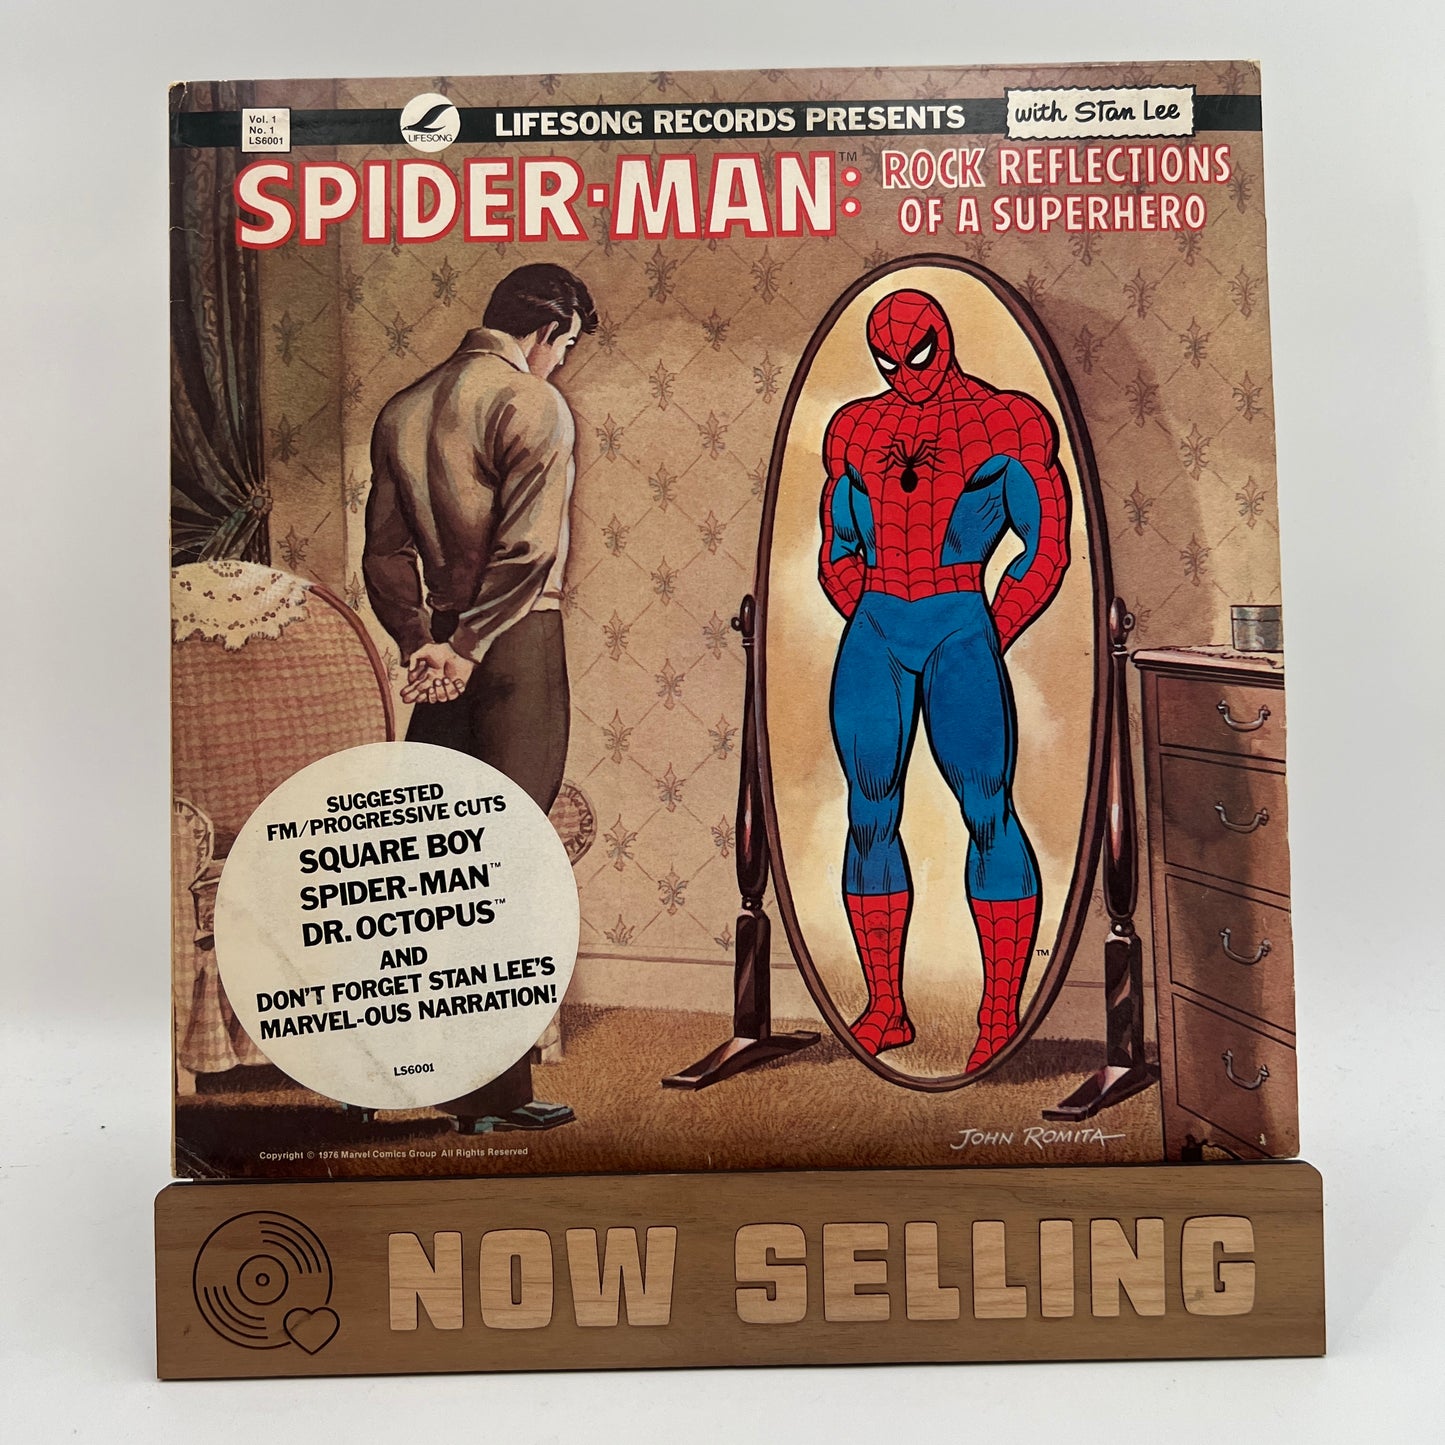 Spider-Man: Rock Reflections Of A Superhero Soundtrack Vinyl LP